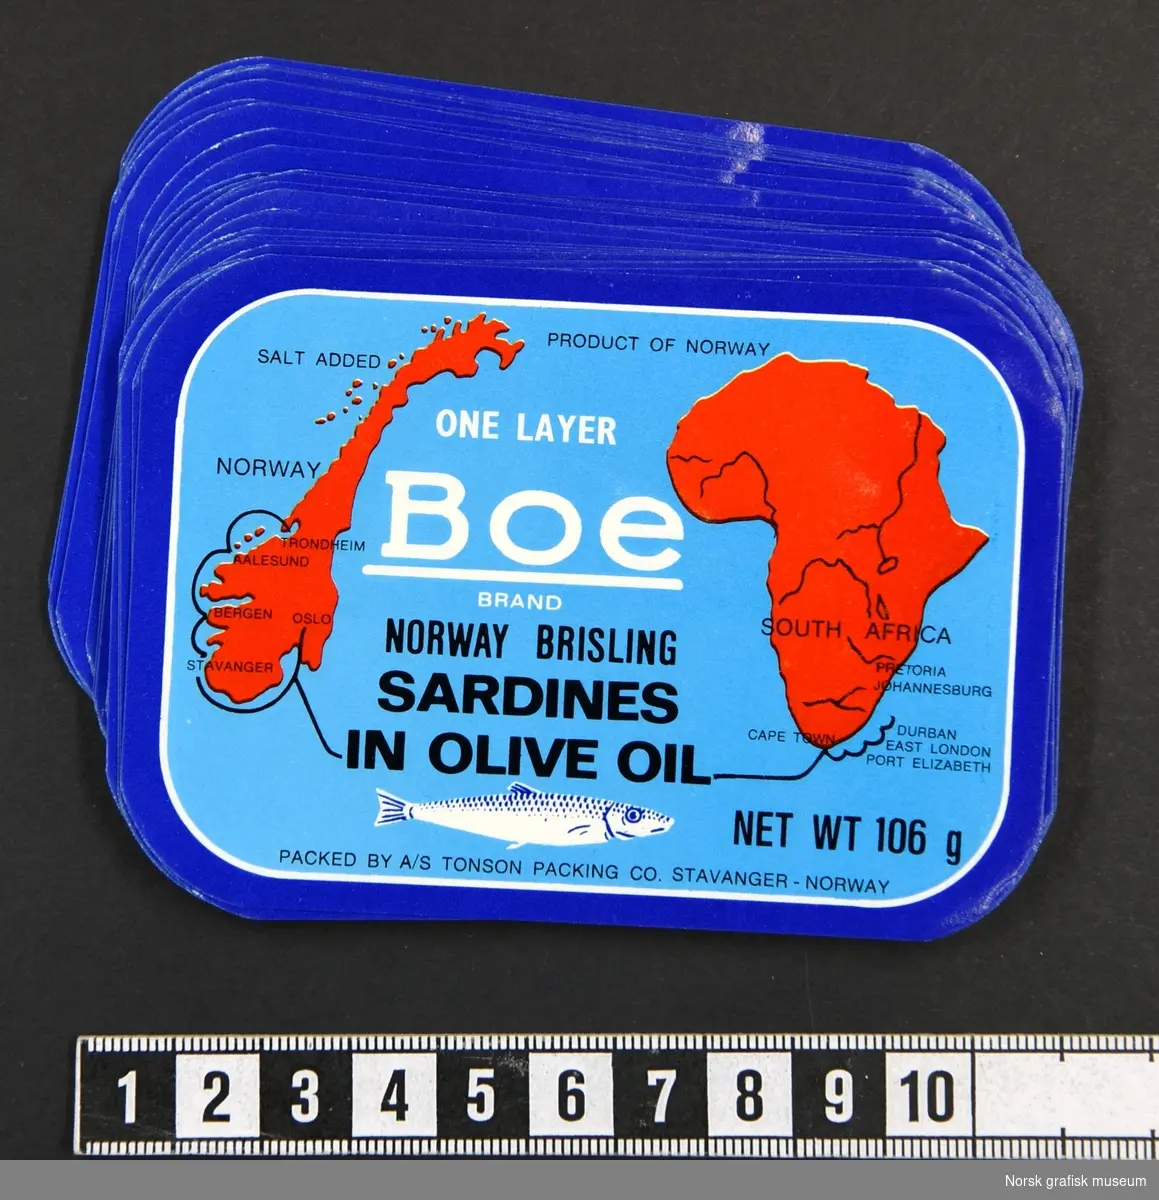 Blå etikett, med mørkere blå bord. Norge og det afrikanske kontinent i rødt. 

"Norway brisling sardines in olive oil"